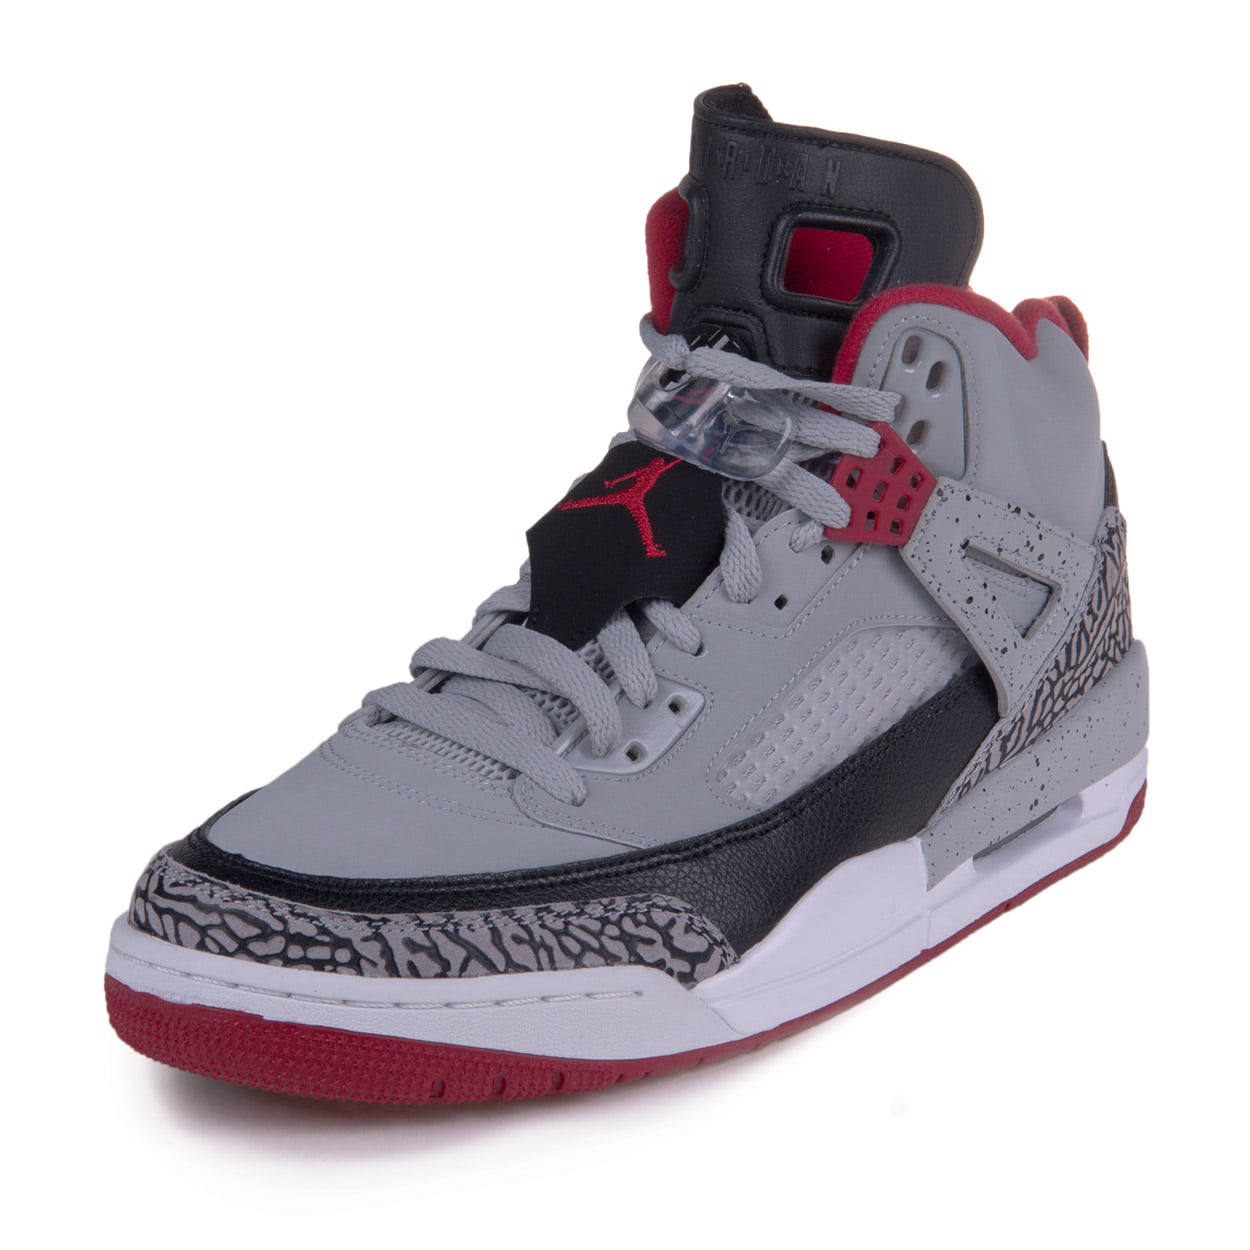 Nike - Nike Mens Jordan Spizike Wolf Grey/Gym Red-Blk-Wht 315371-003 ...